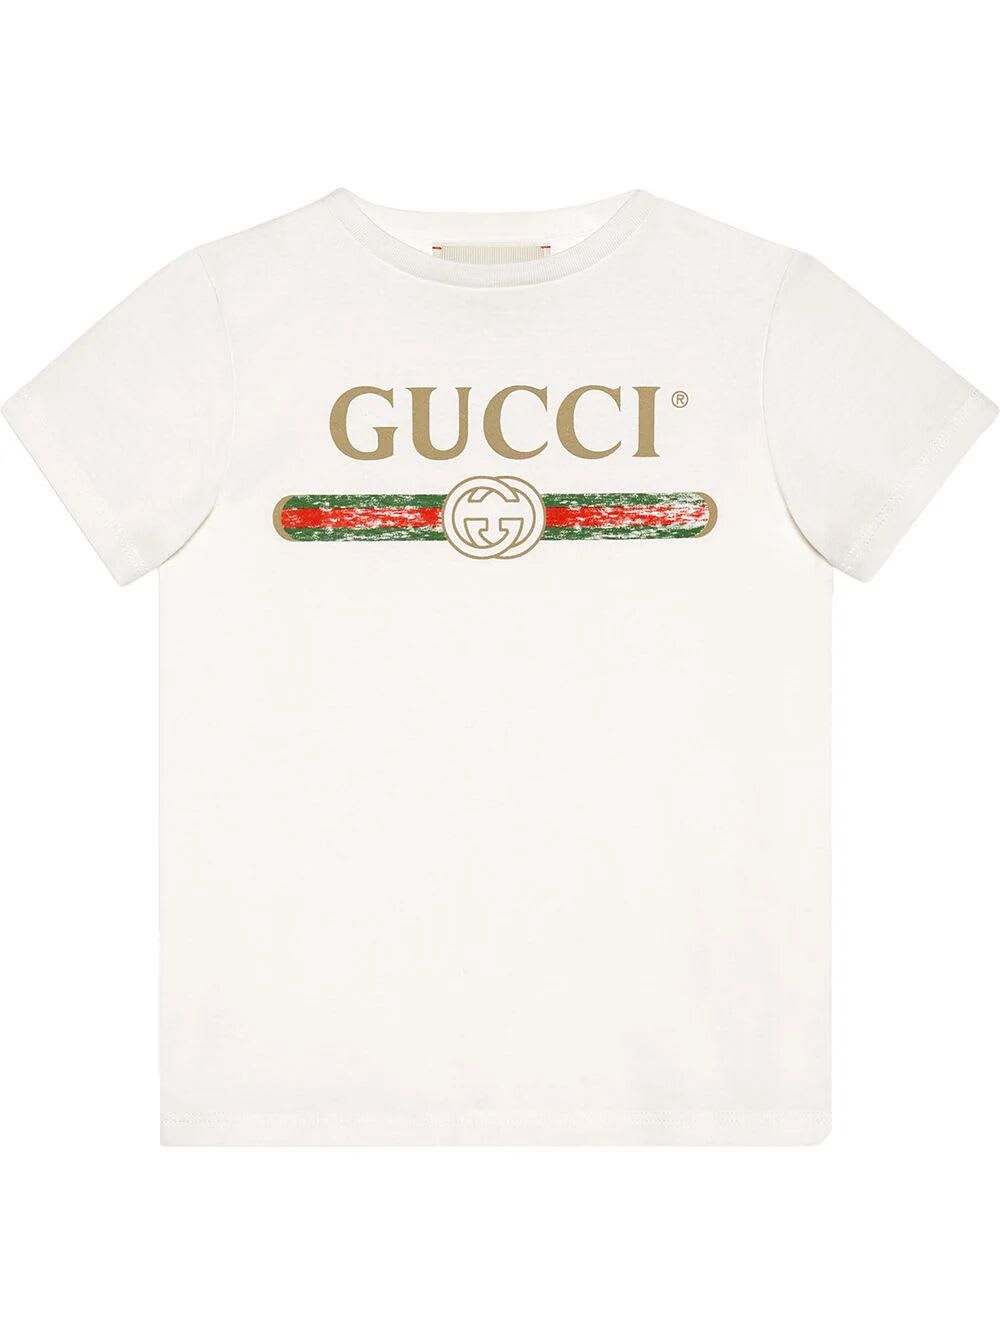 Gucci T-shirt Cotton Jersey